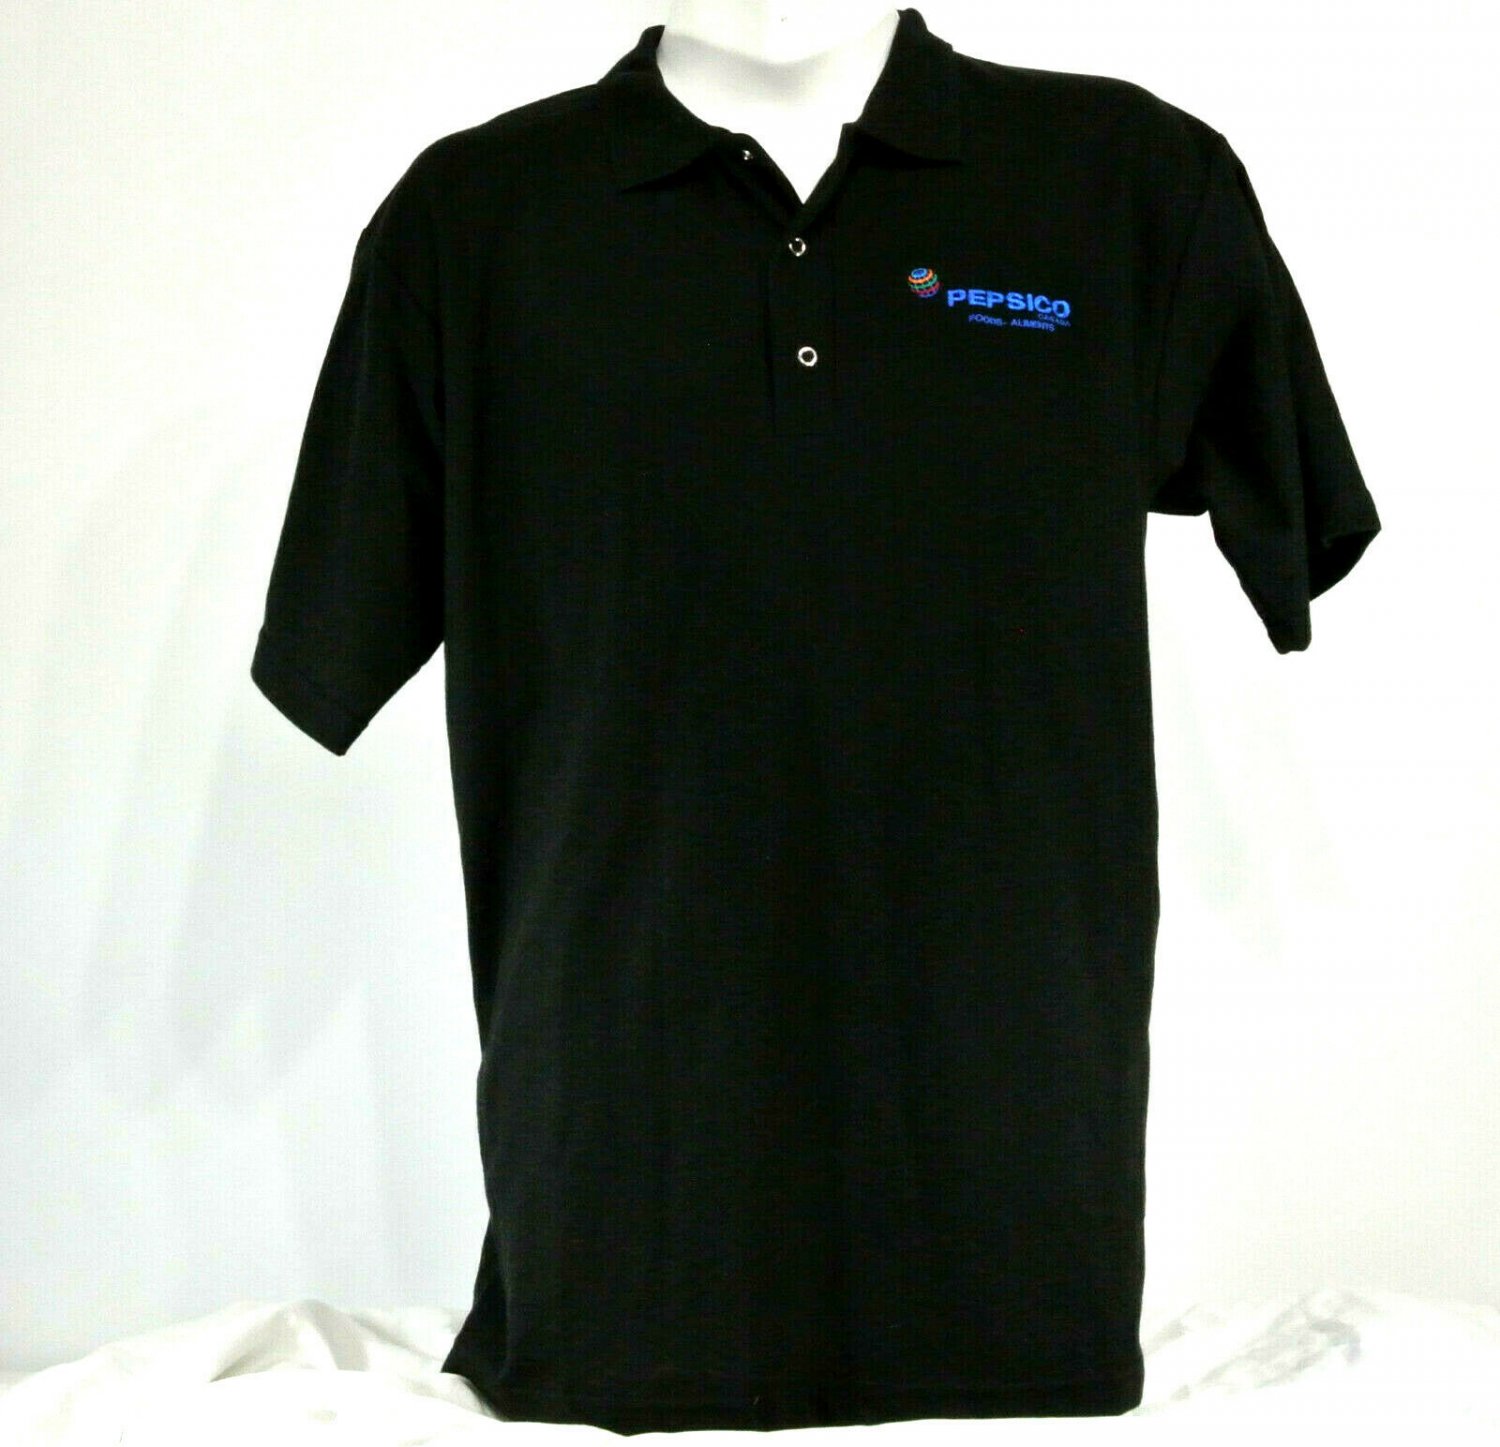 PEPSI Pepsico Employee Uniform Polo Golf Shirt Black Men's Size XL 48 EUC